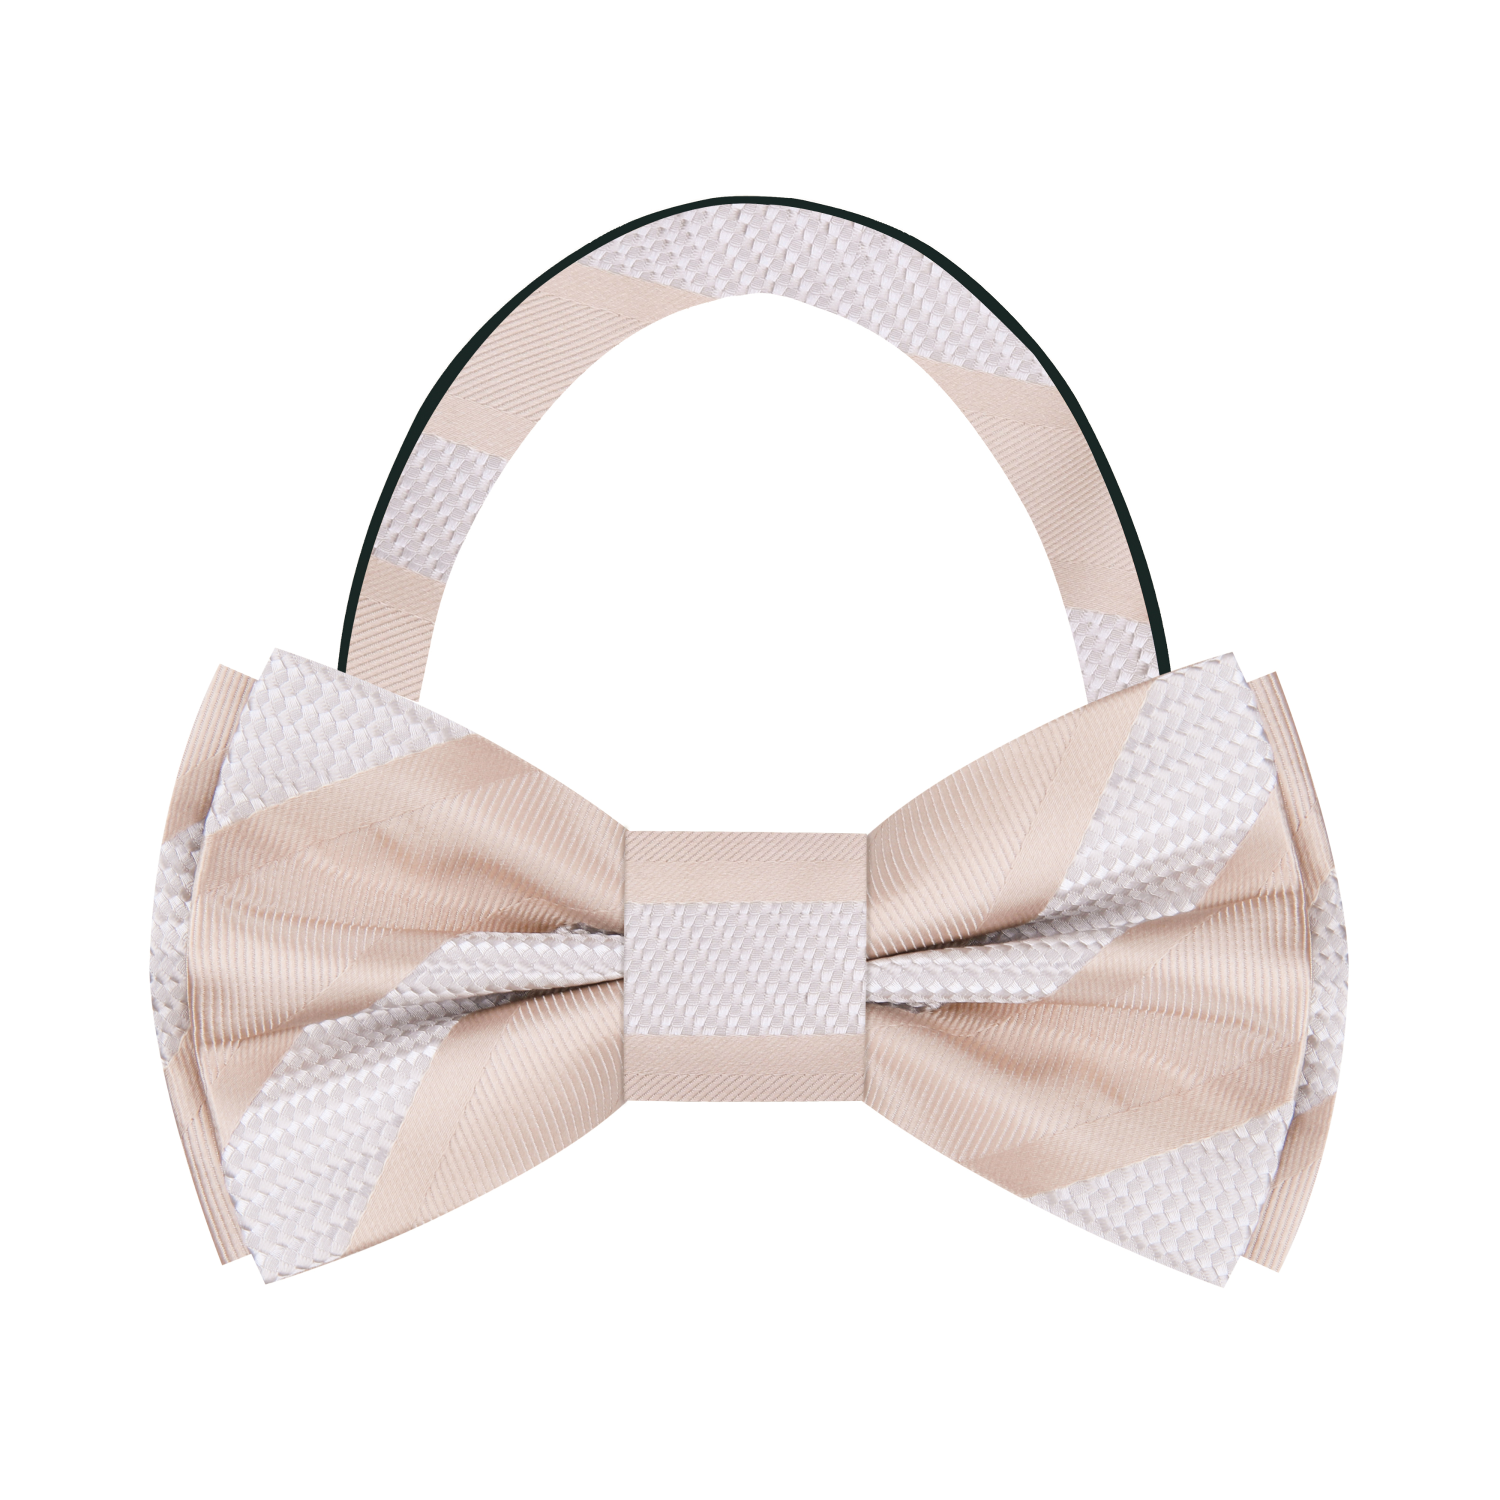 Off-white/Light Brown Block Stripe Bow Tie Pre Tied